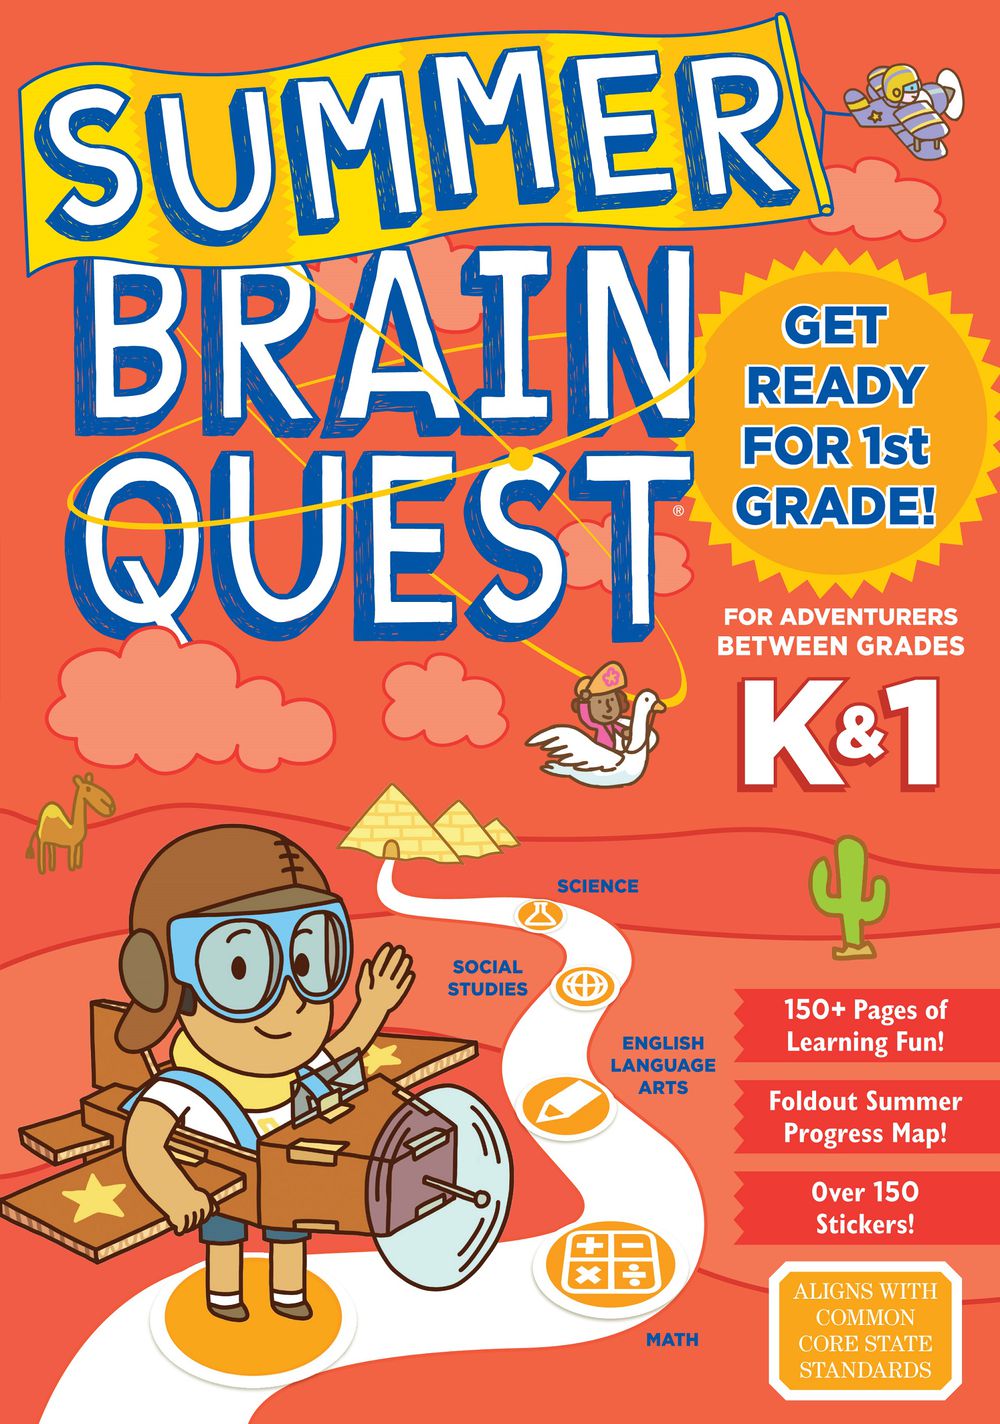 Summer Brain Quest－Between Grades K & 1